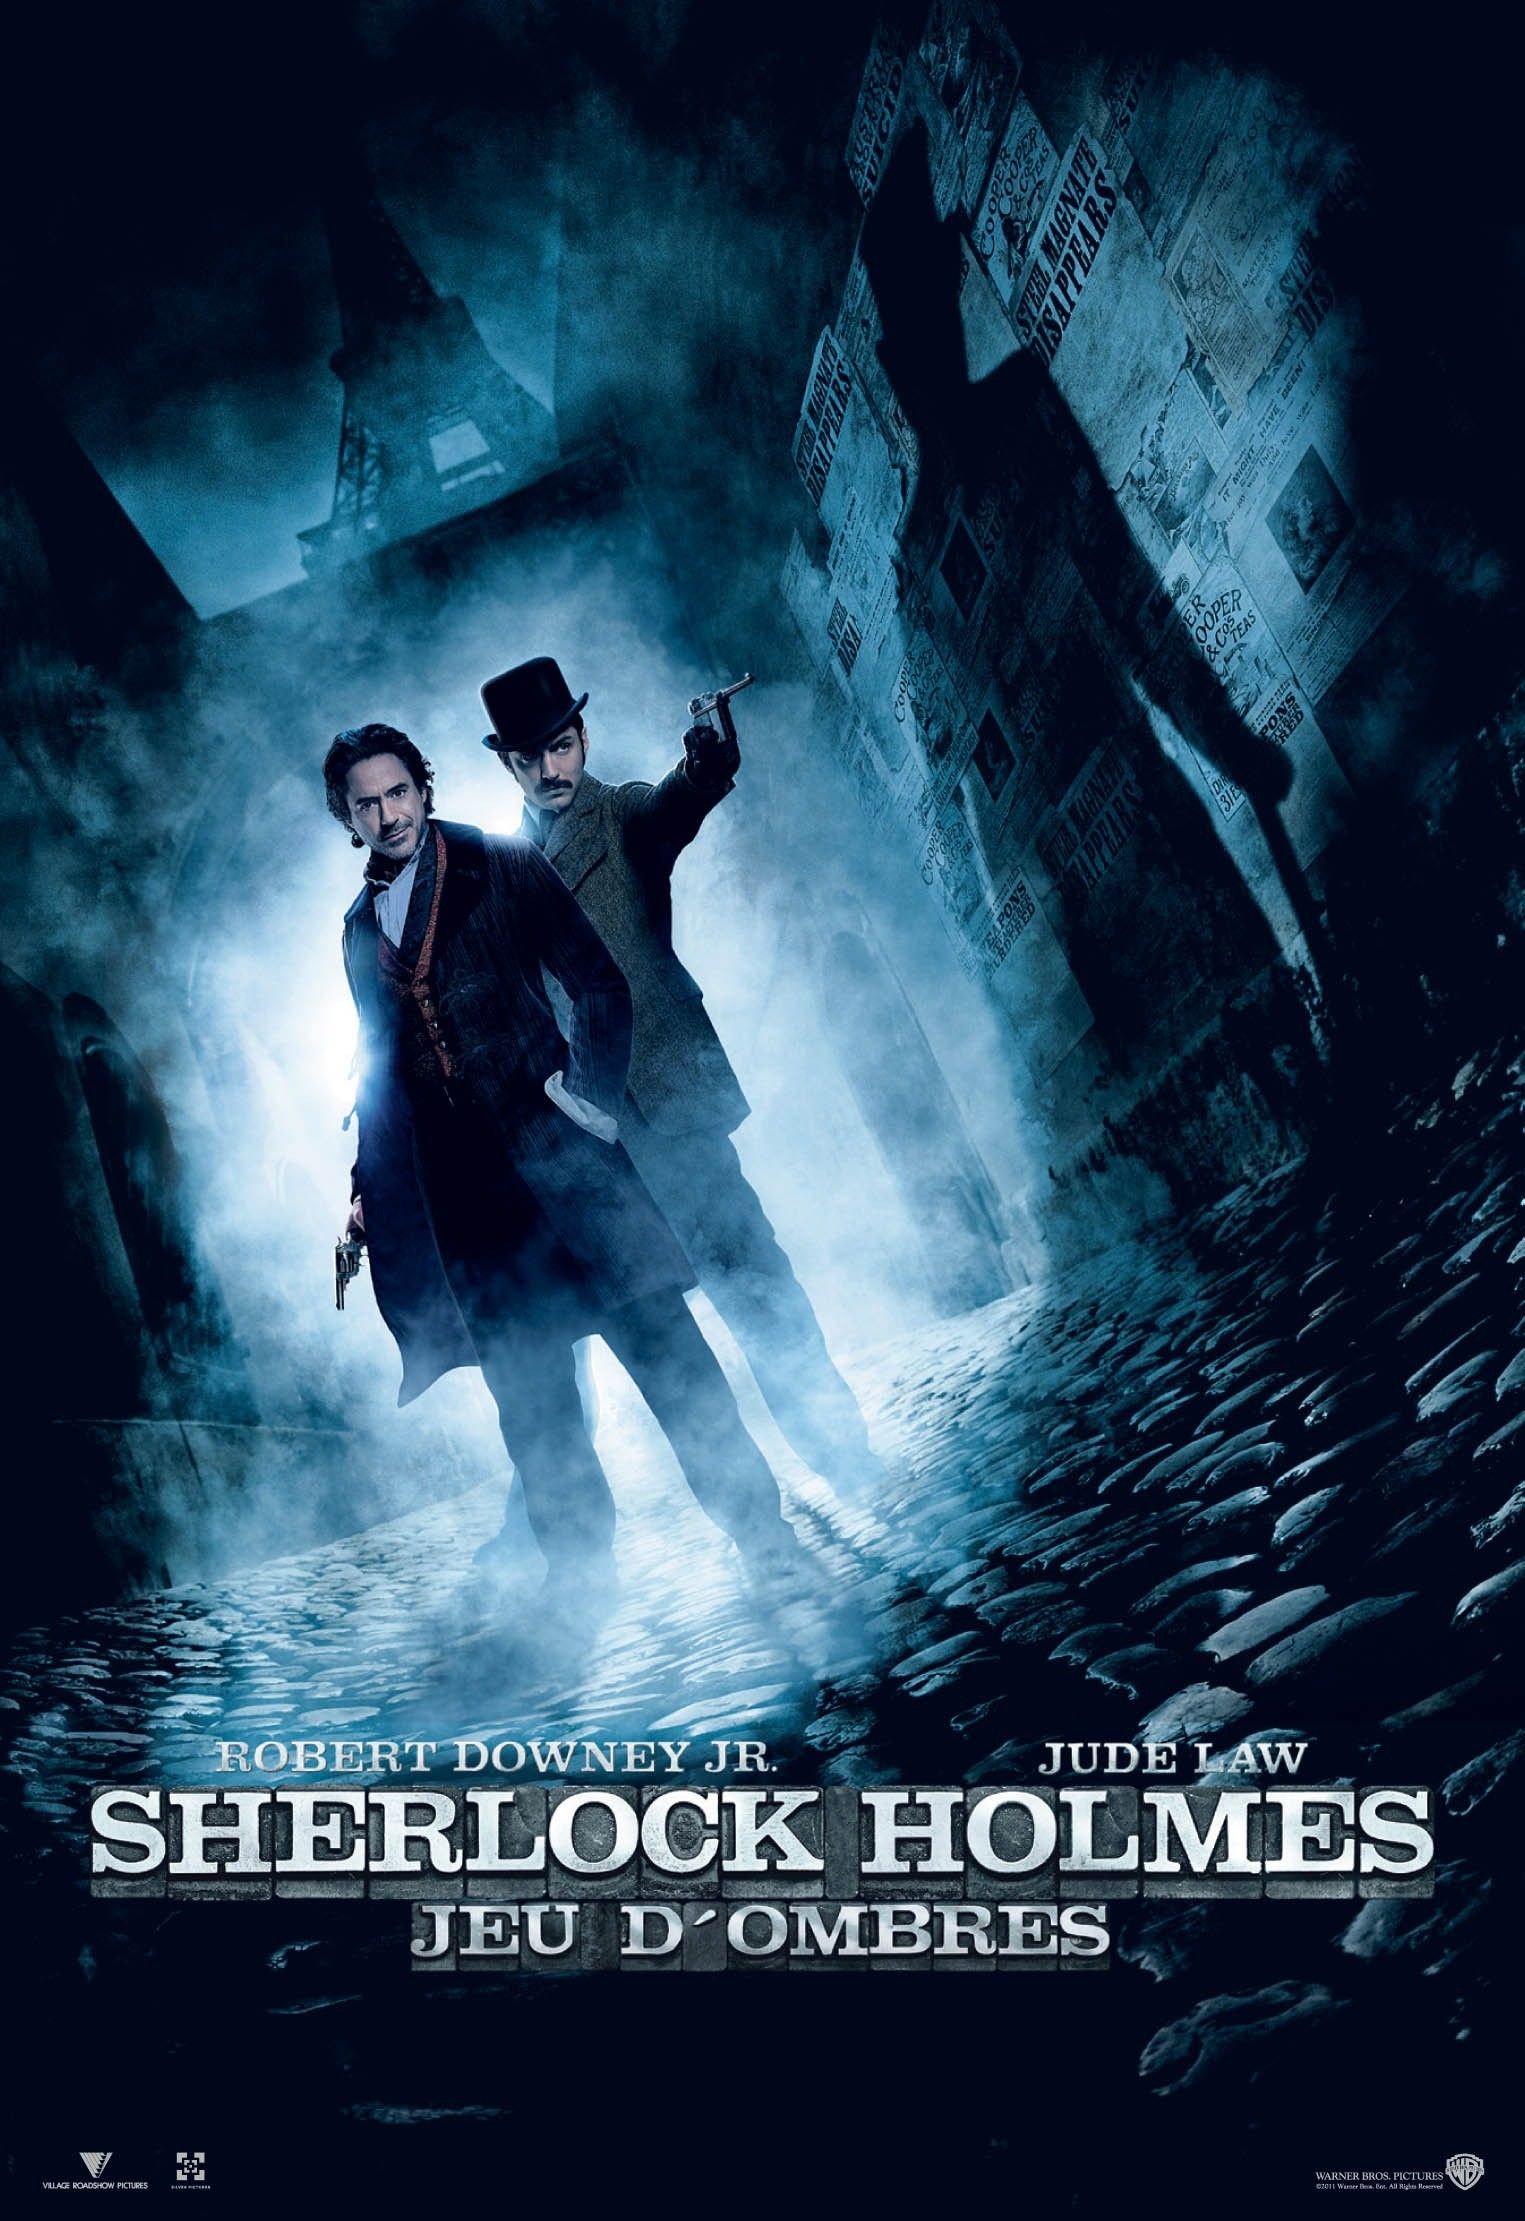 Шерлок Холмс: Игра теней